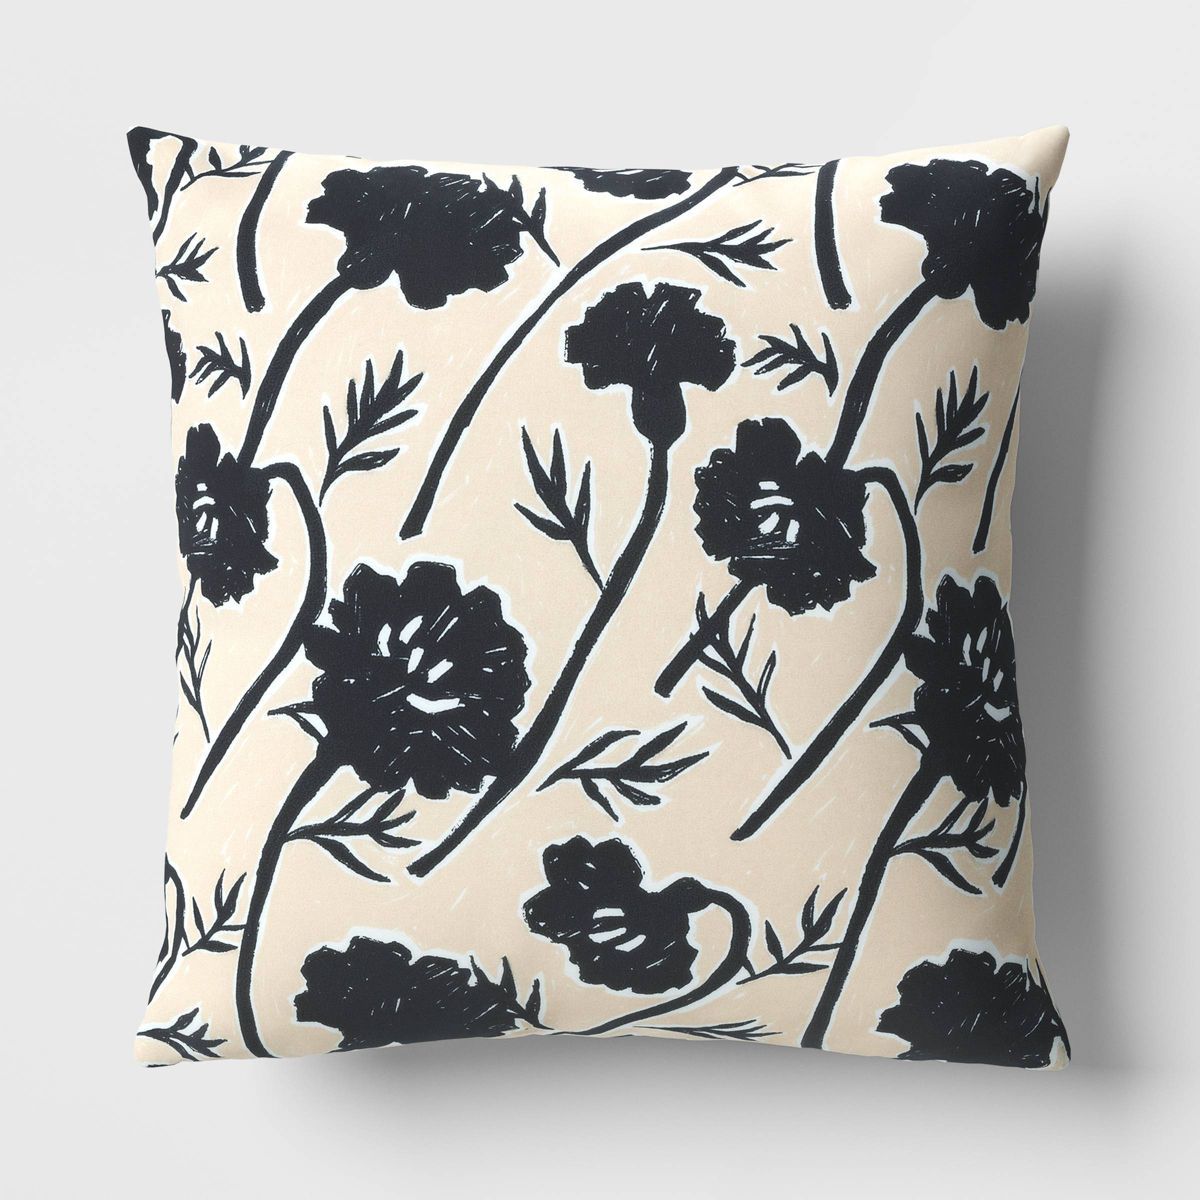 17"x17" Calendula Floral Square Outdoor Throw Pillow Tan/Black - Room Essentials™ | Target